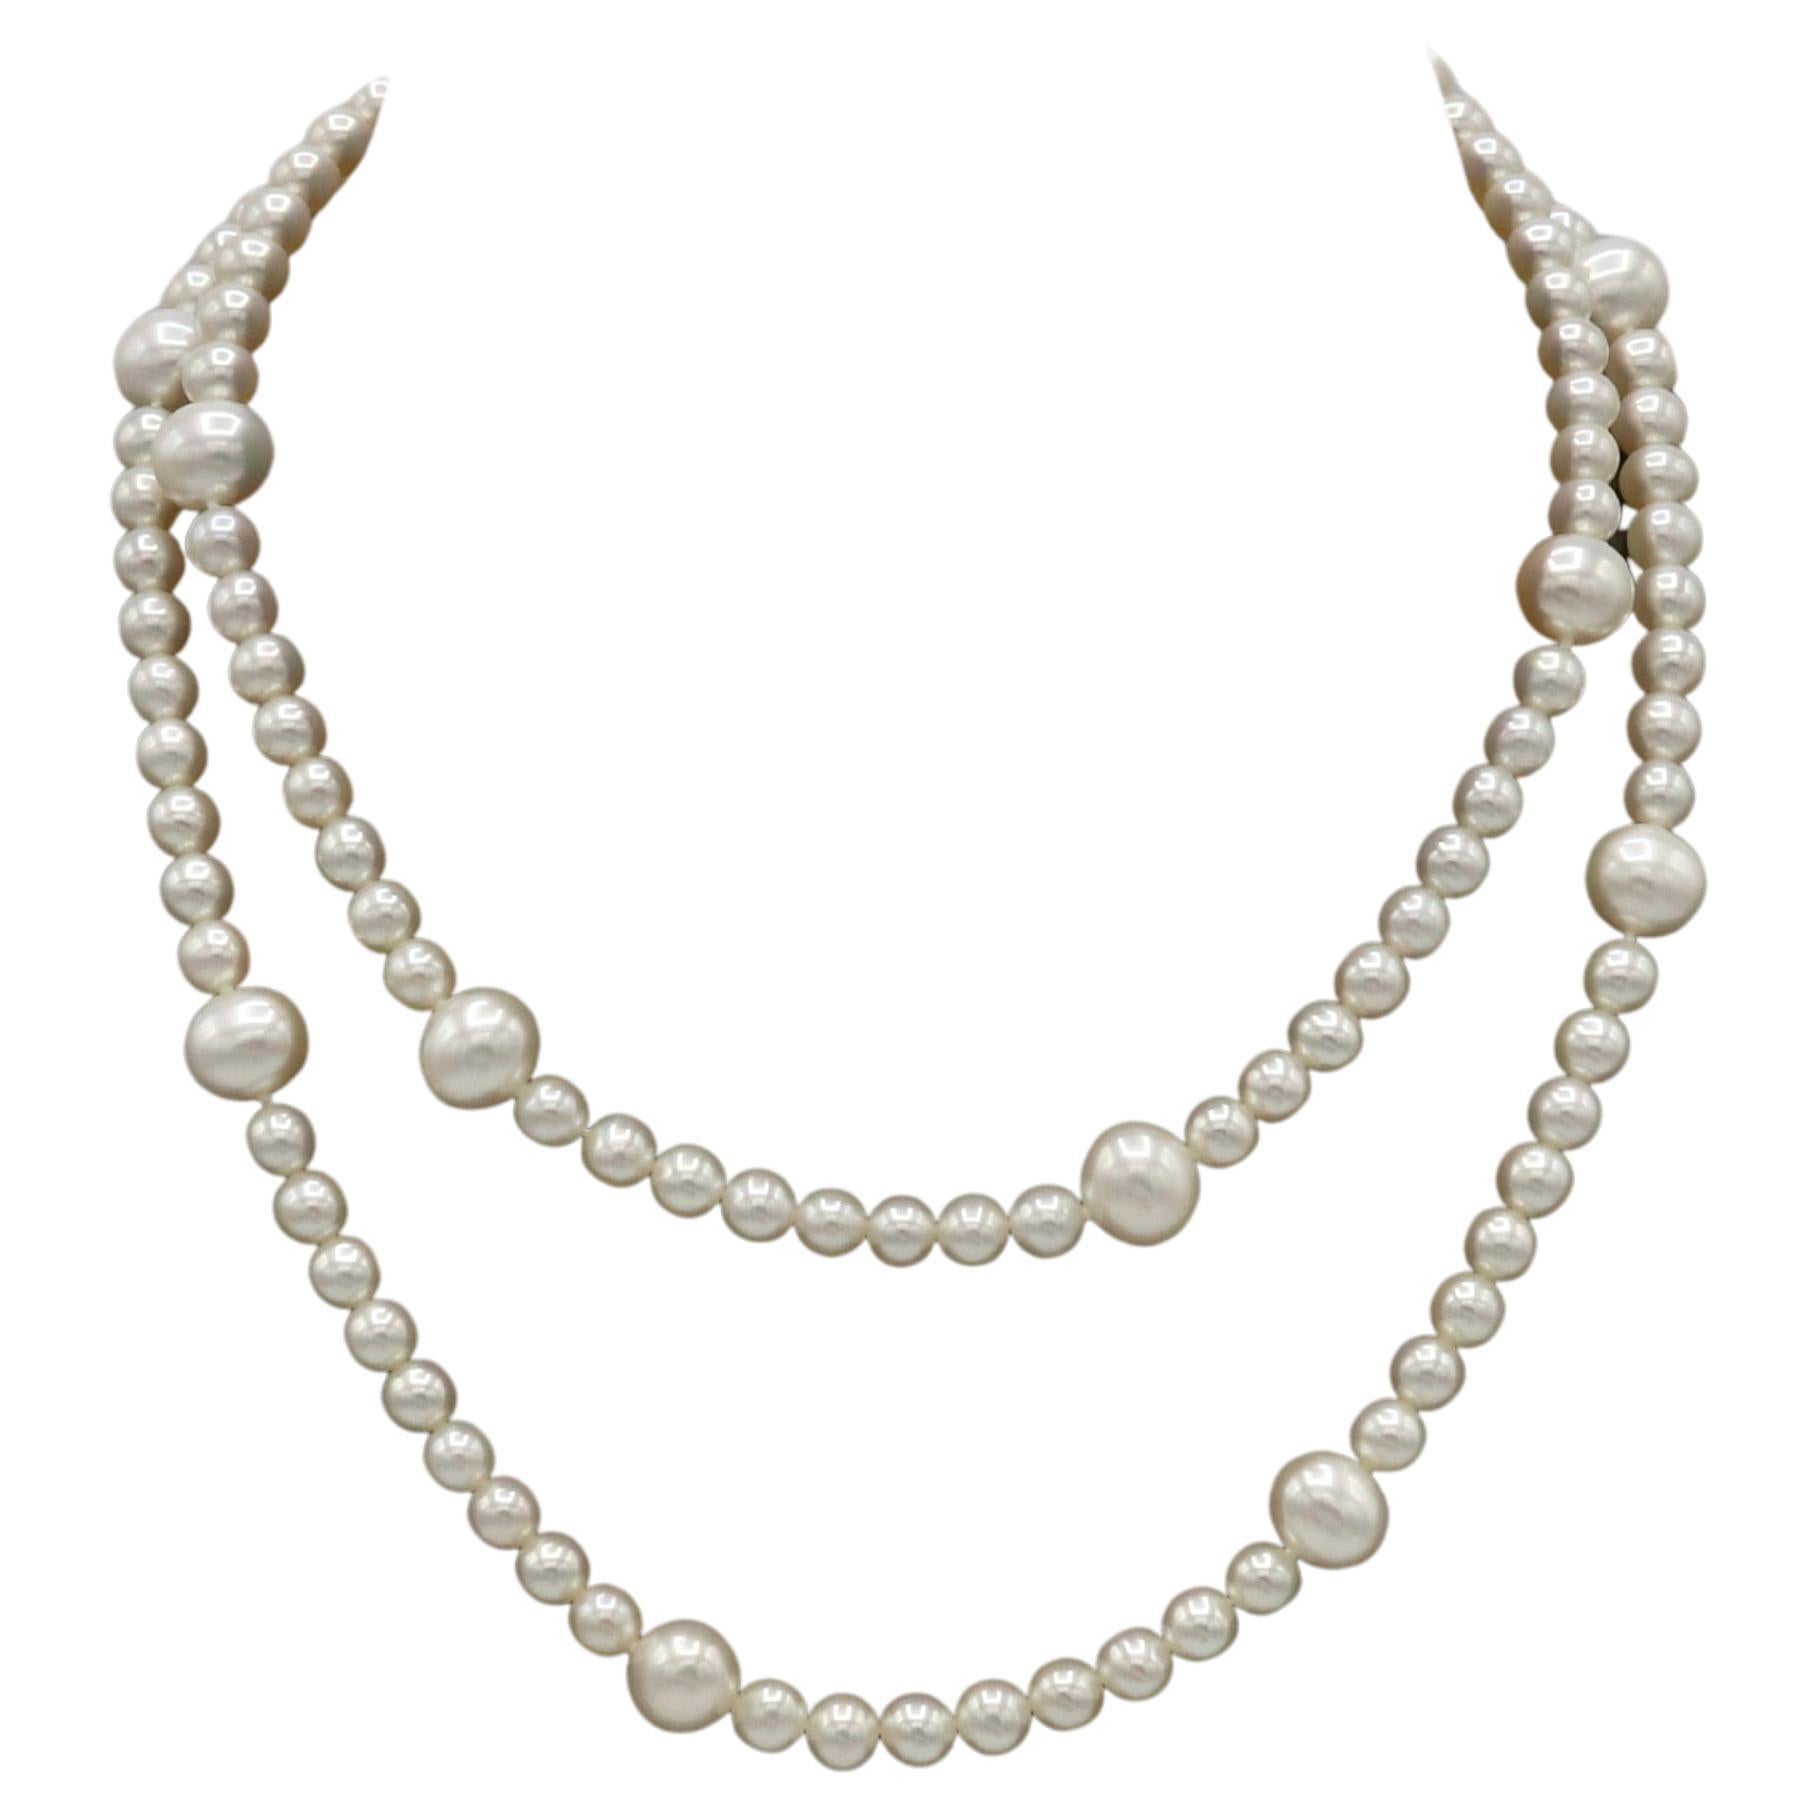 Tiffany & Co. Collier de perles en argent 